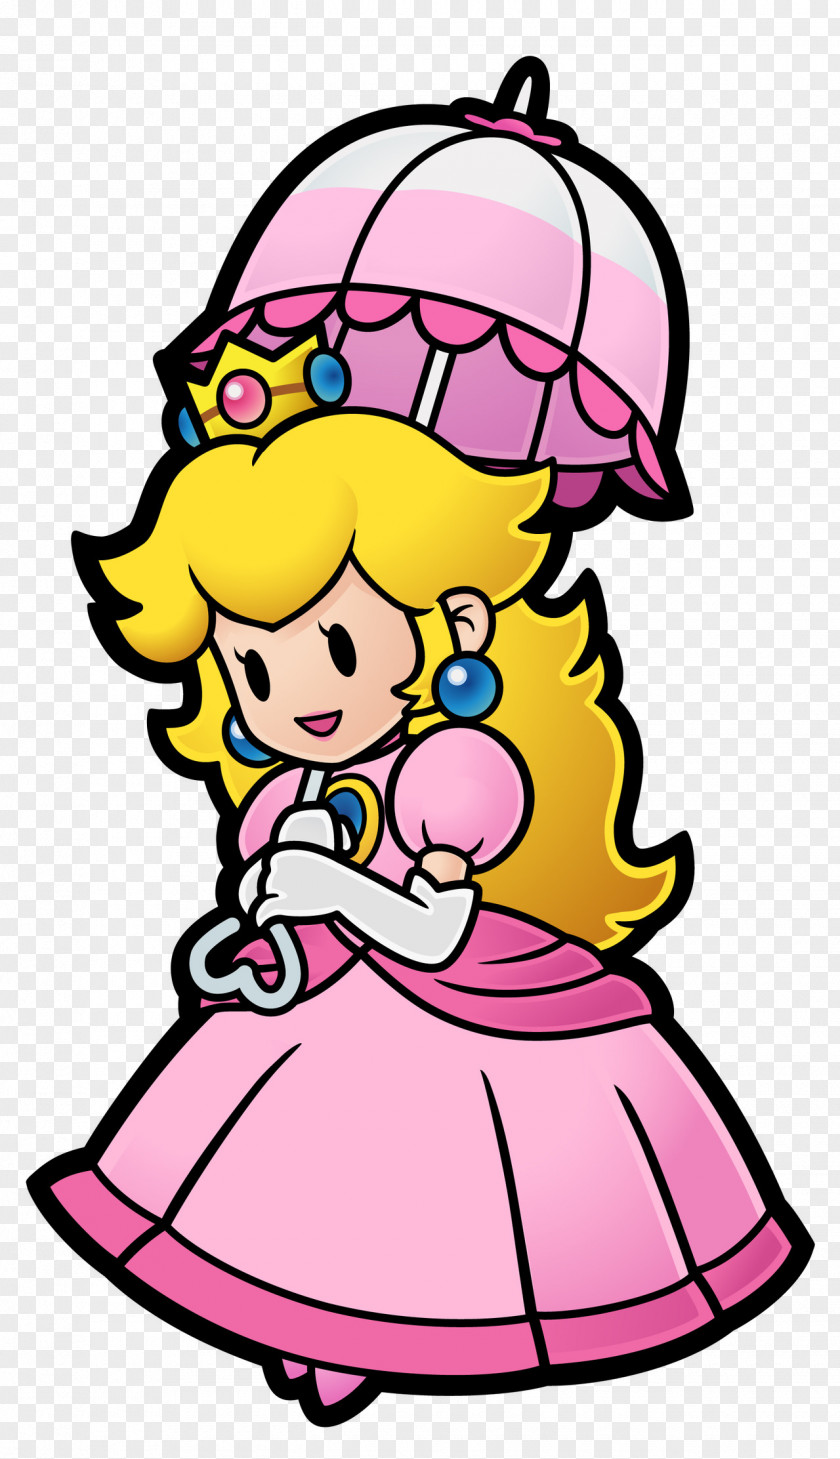 Peach Super Mario Bros. Princess Paper PNG